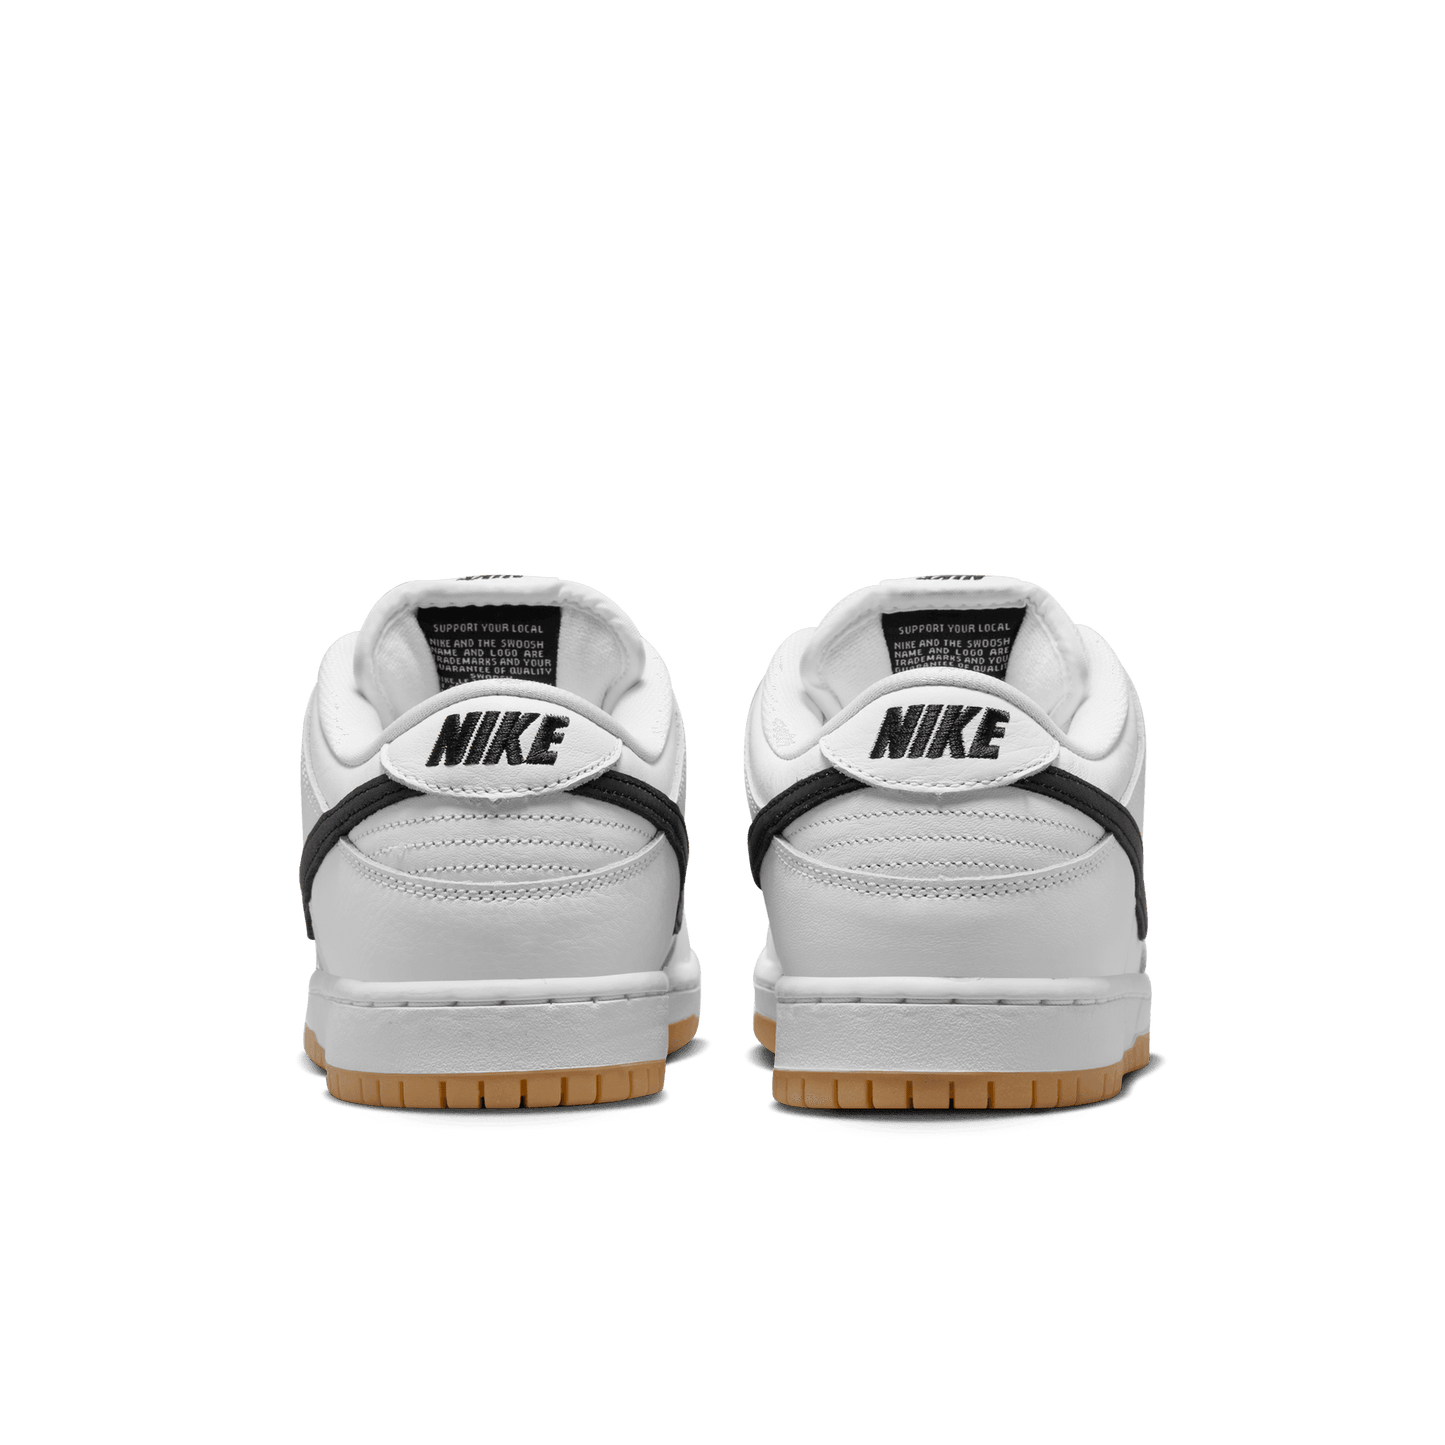 Nike SB Dunk Low Pro ISO white black white gum light brown